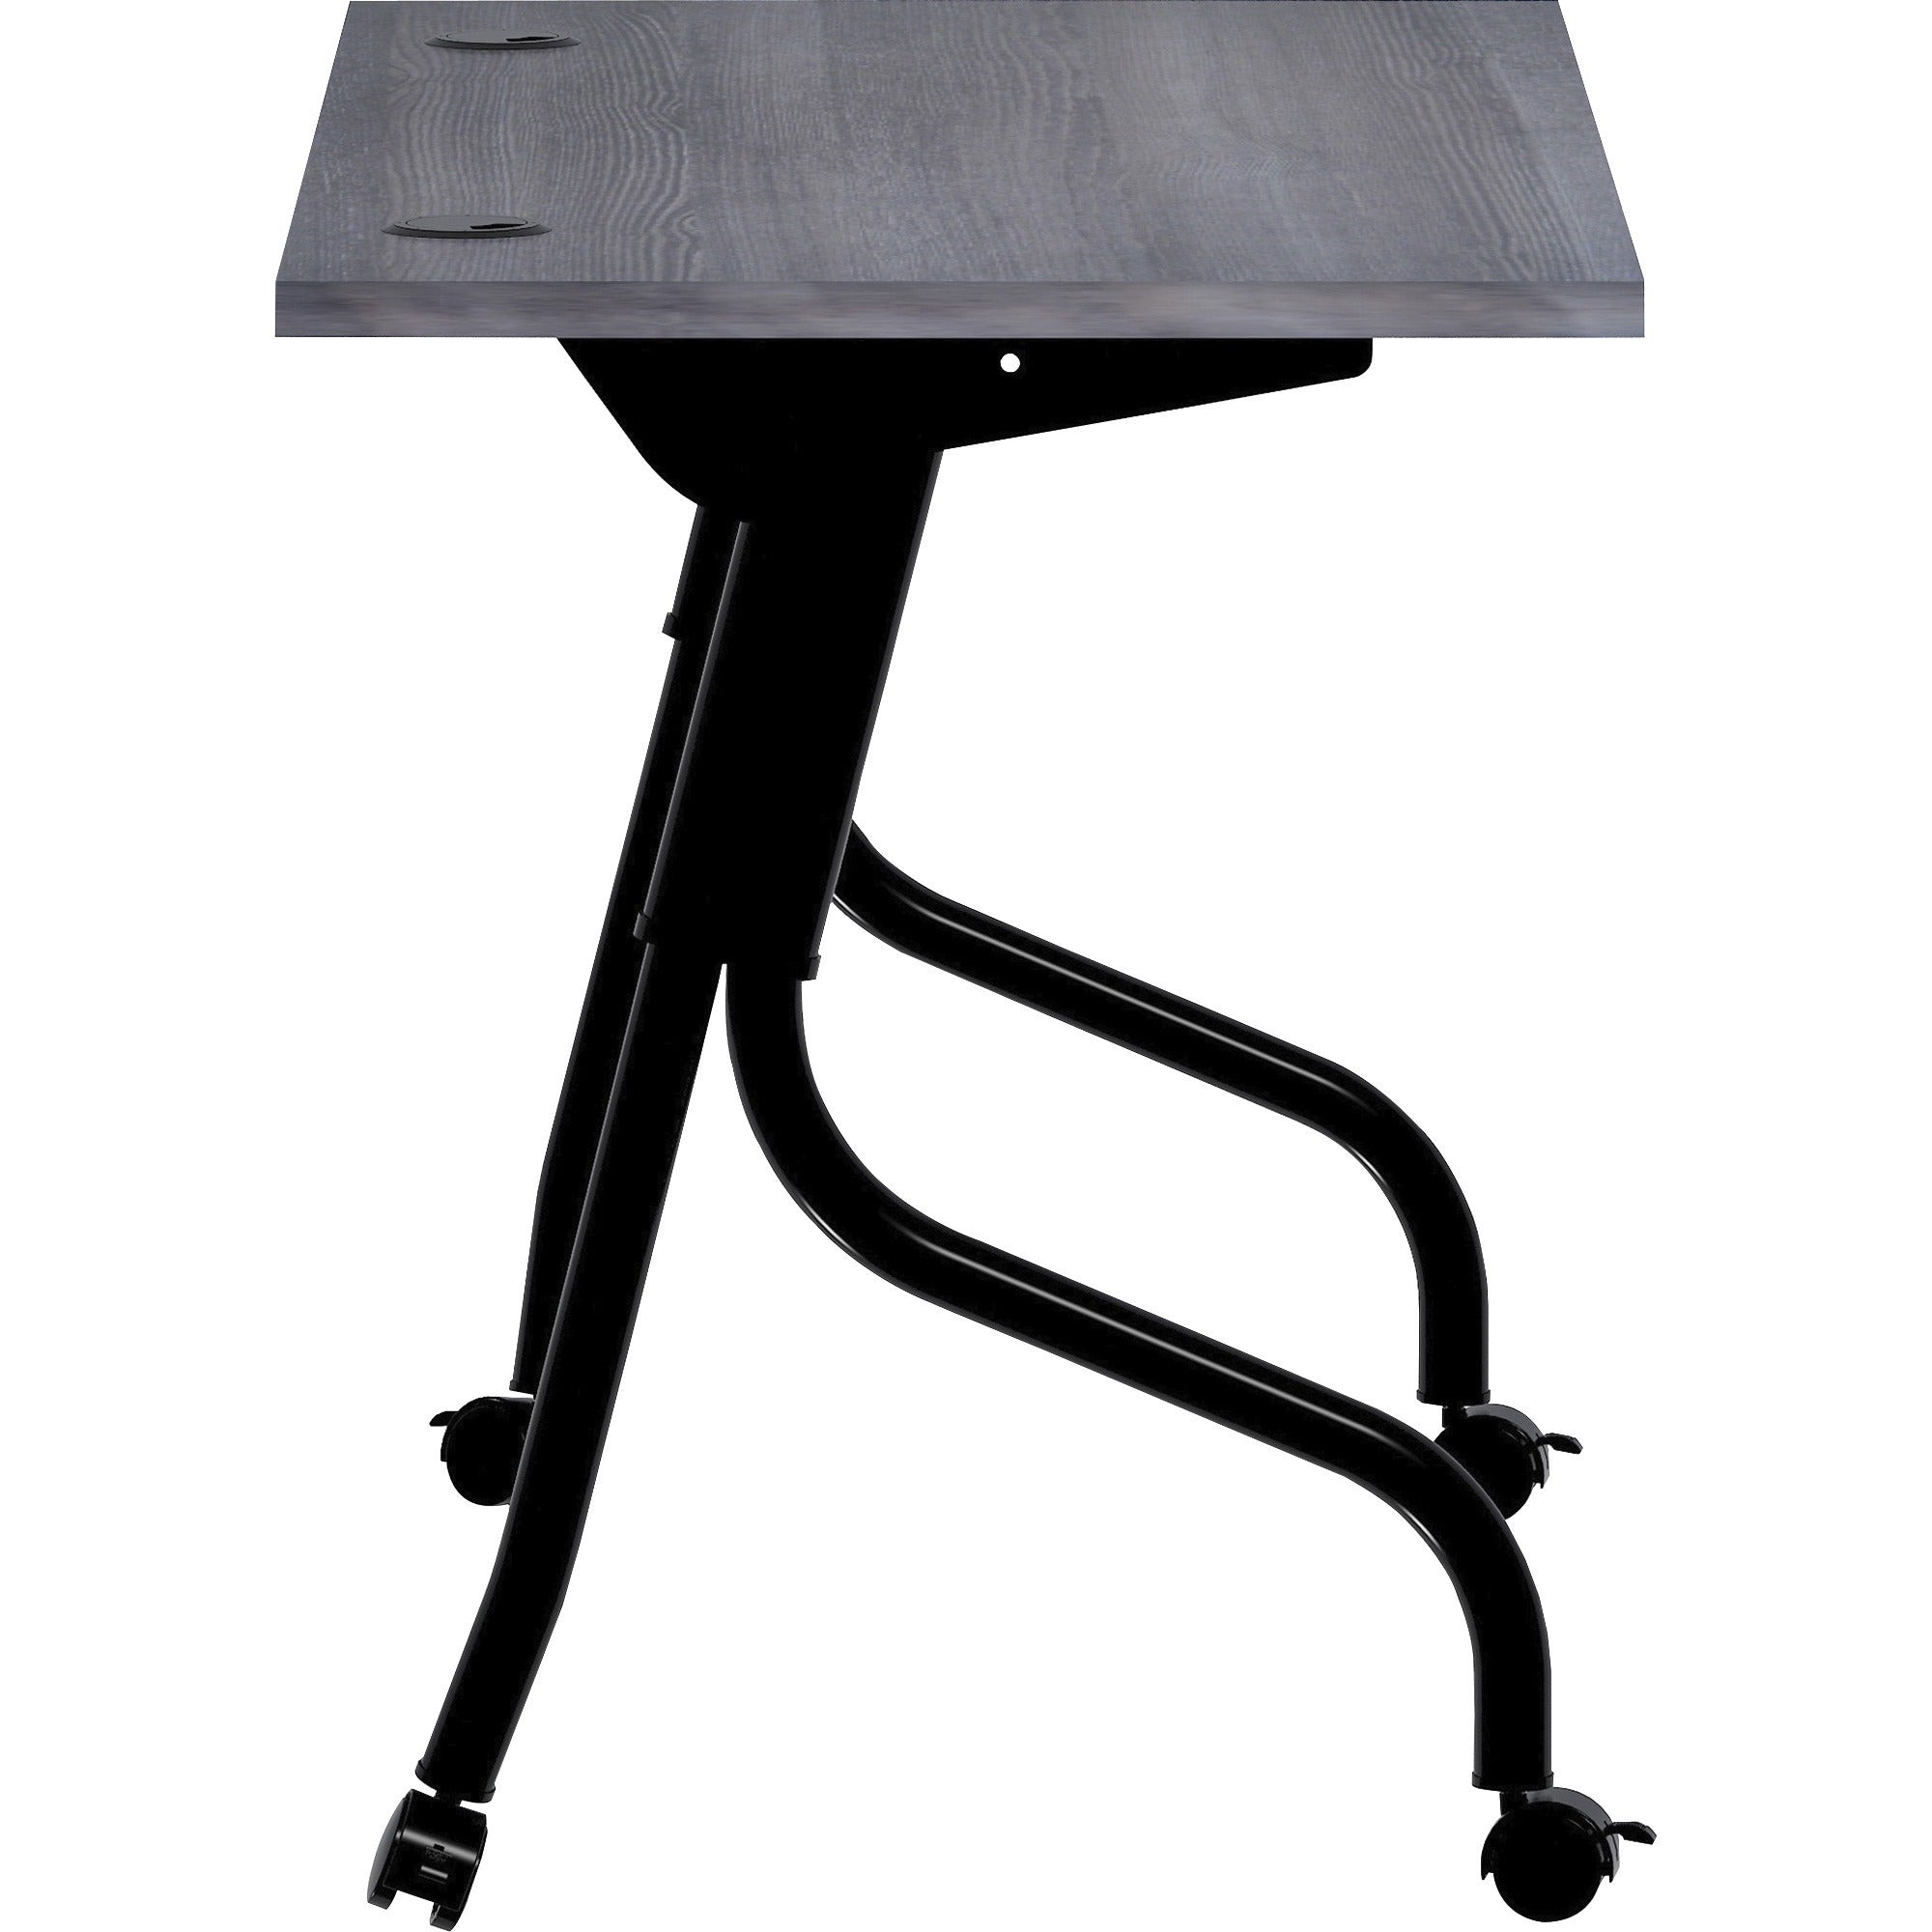 lorell-flip-top-training-table-for-table-topcharcoal-rectangle-melamine-top-black-four-leg-base-4-legs-x-48-table-top-width-x-2360-table-top-depth-2950-height-melamine-1-each_llr59489 - 4